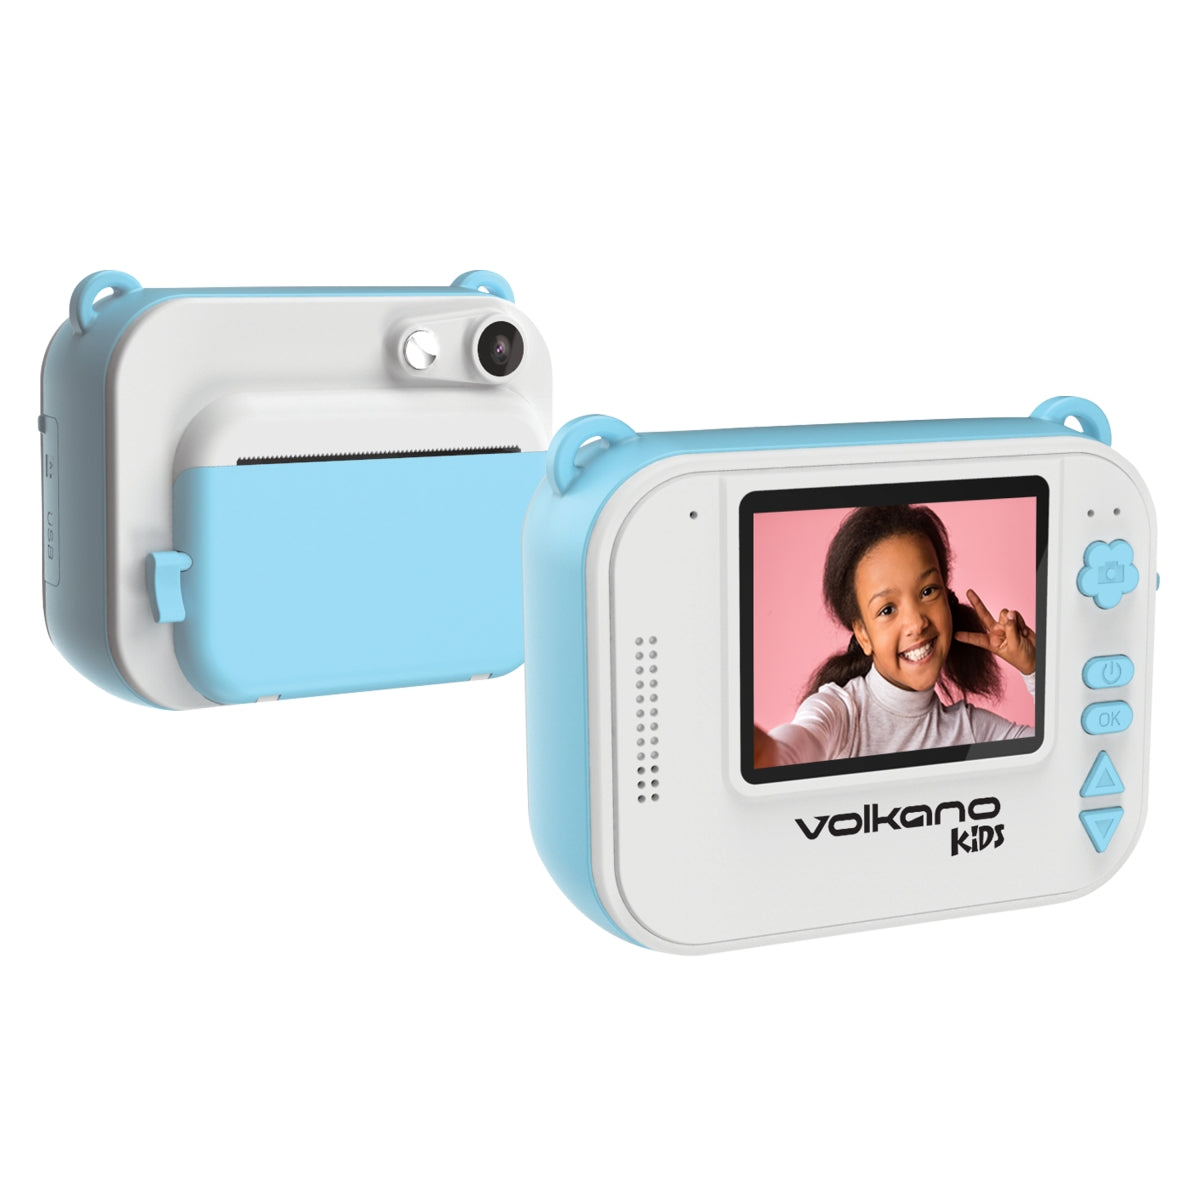 Volkano Kids Pronto Series Instant Digital Camera